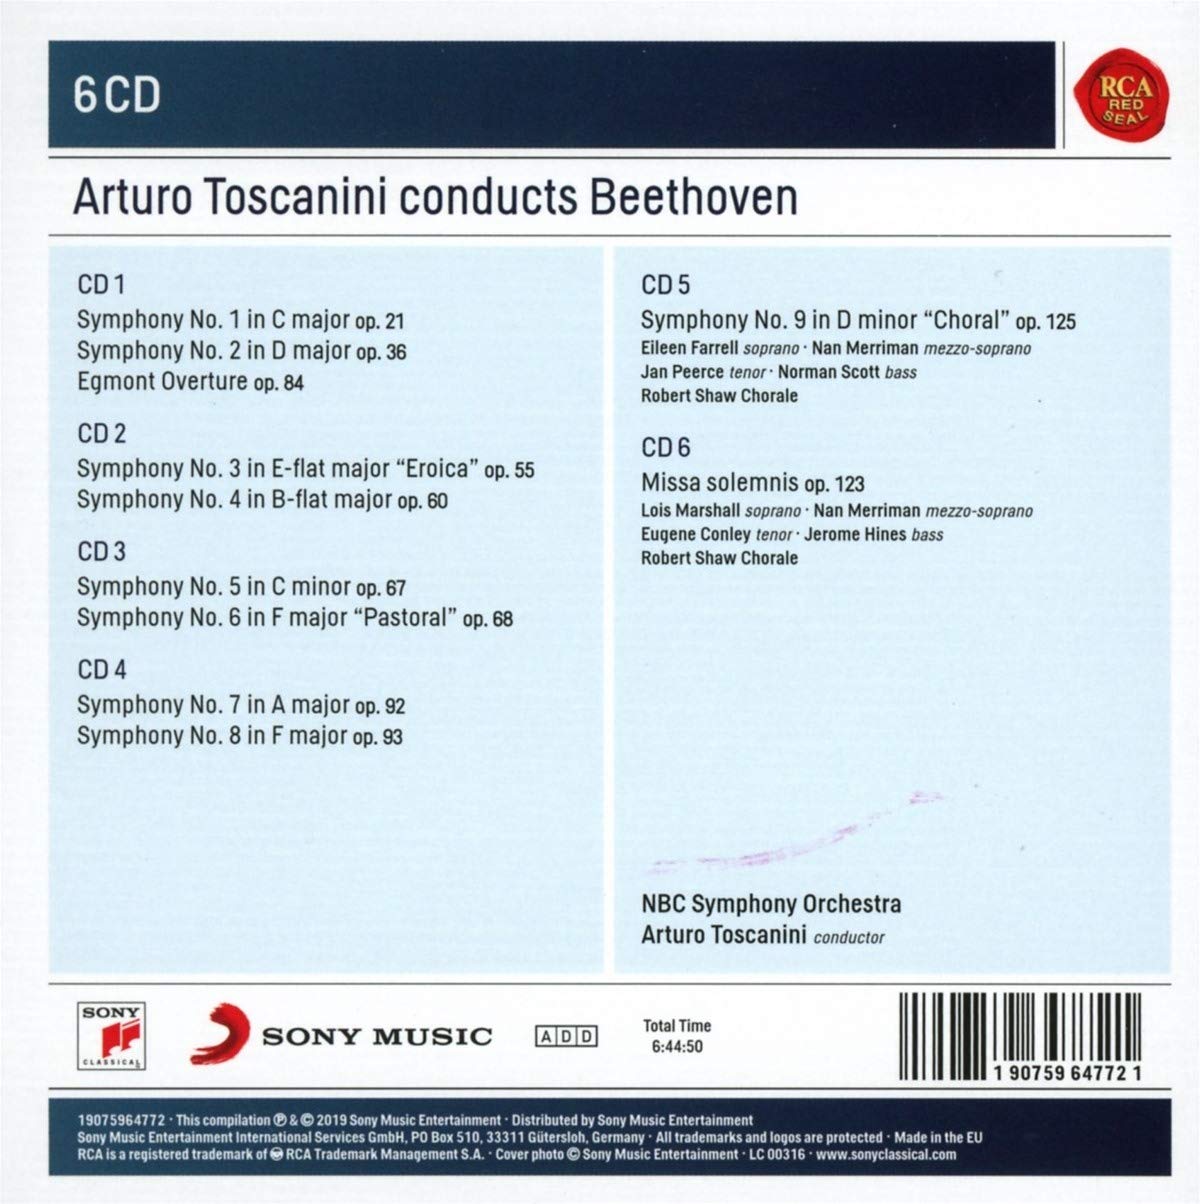 Arturo Toscanini conducts Beethoven | Arturo Toscanini, Ludwig Van Beethoven image1